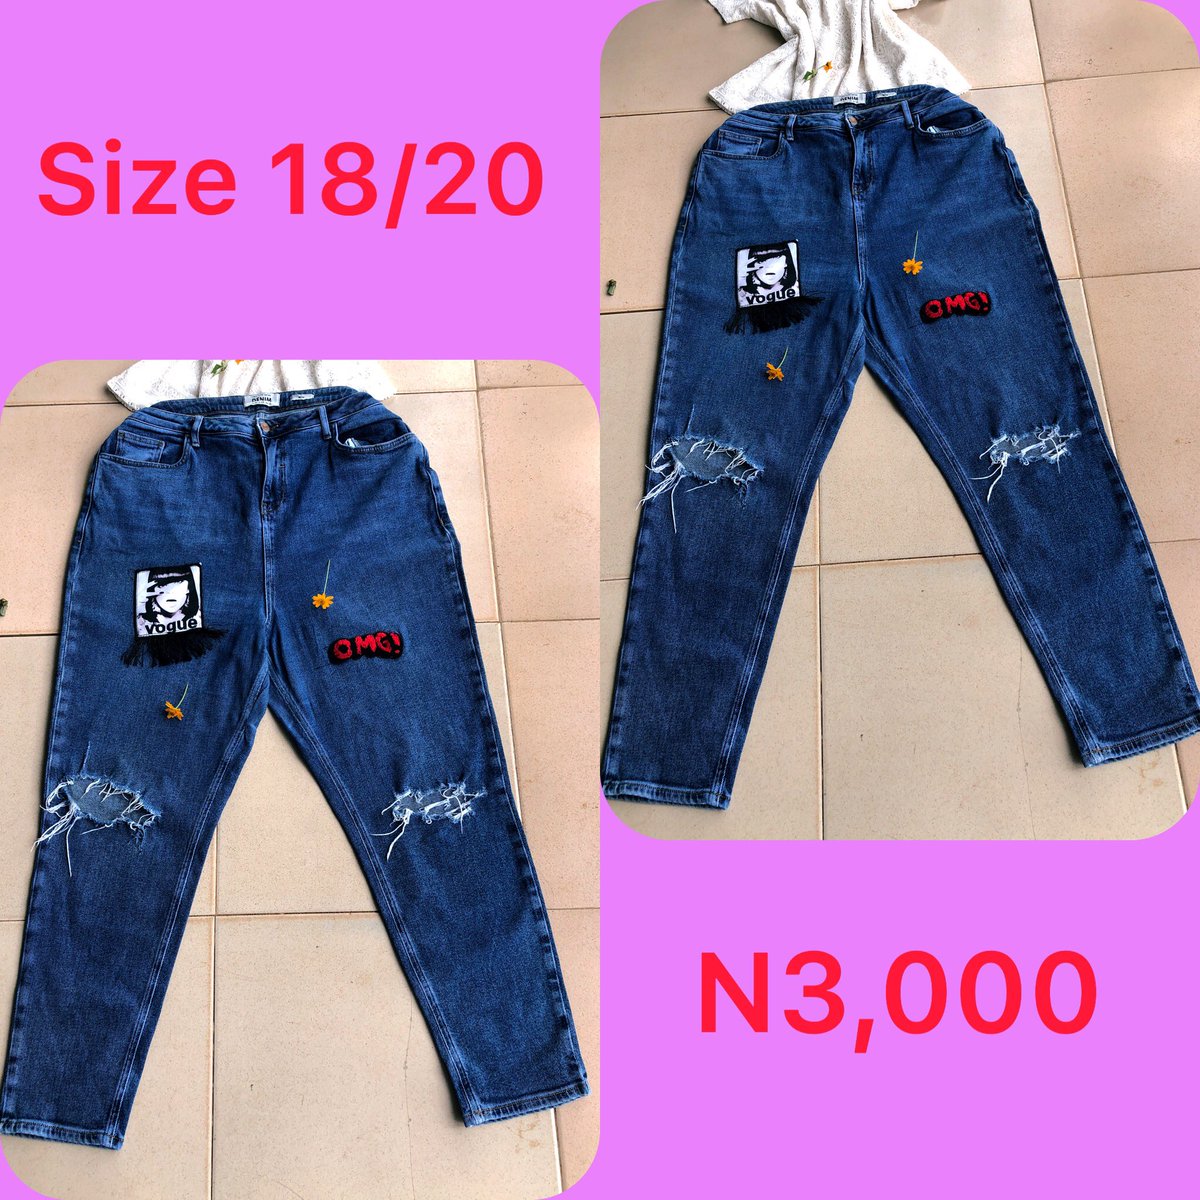 Slide 1: bf jeans       Size 12, N2,000Slide 2: bf jeans       Size 18/20, Price: N3,000Slide 3: bf jeans       Size 10, Price: N2,500Slide 4: bf jeans       Size 10, Price N2,500